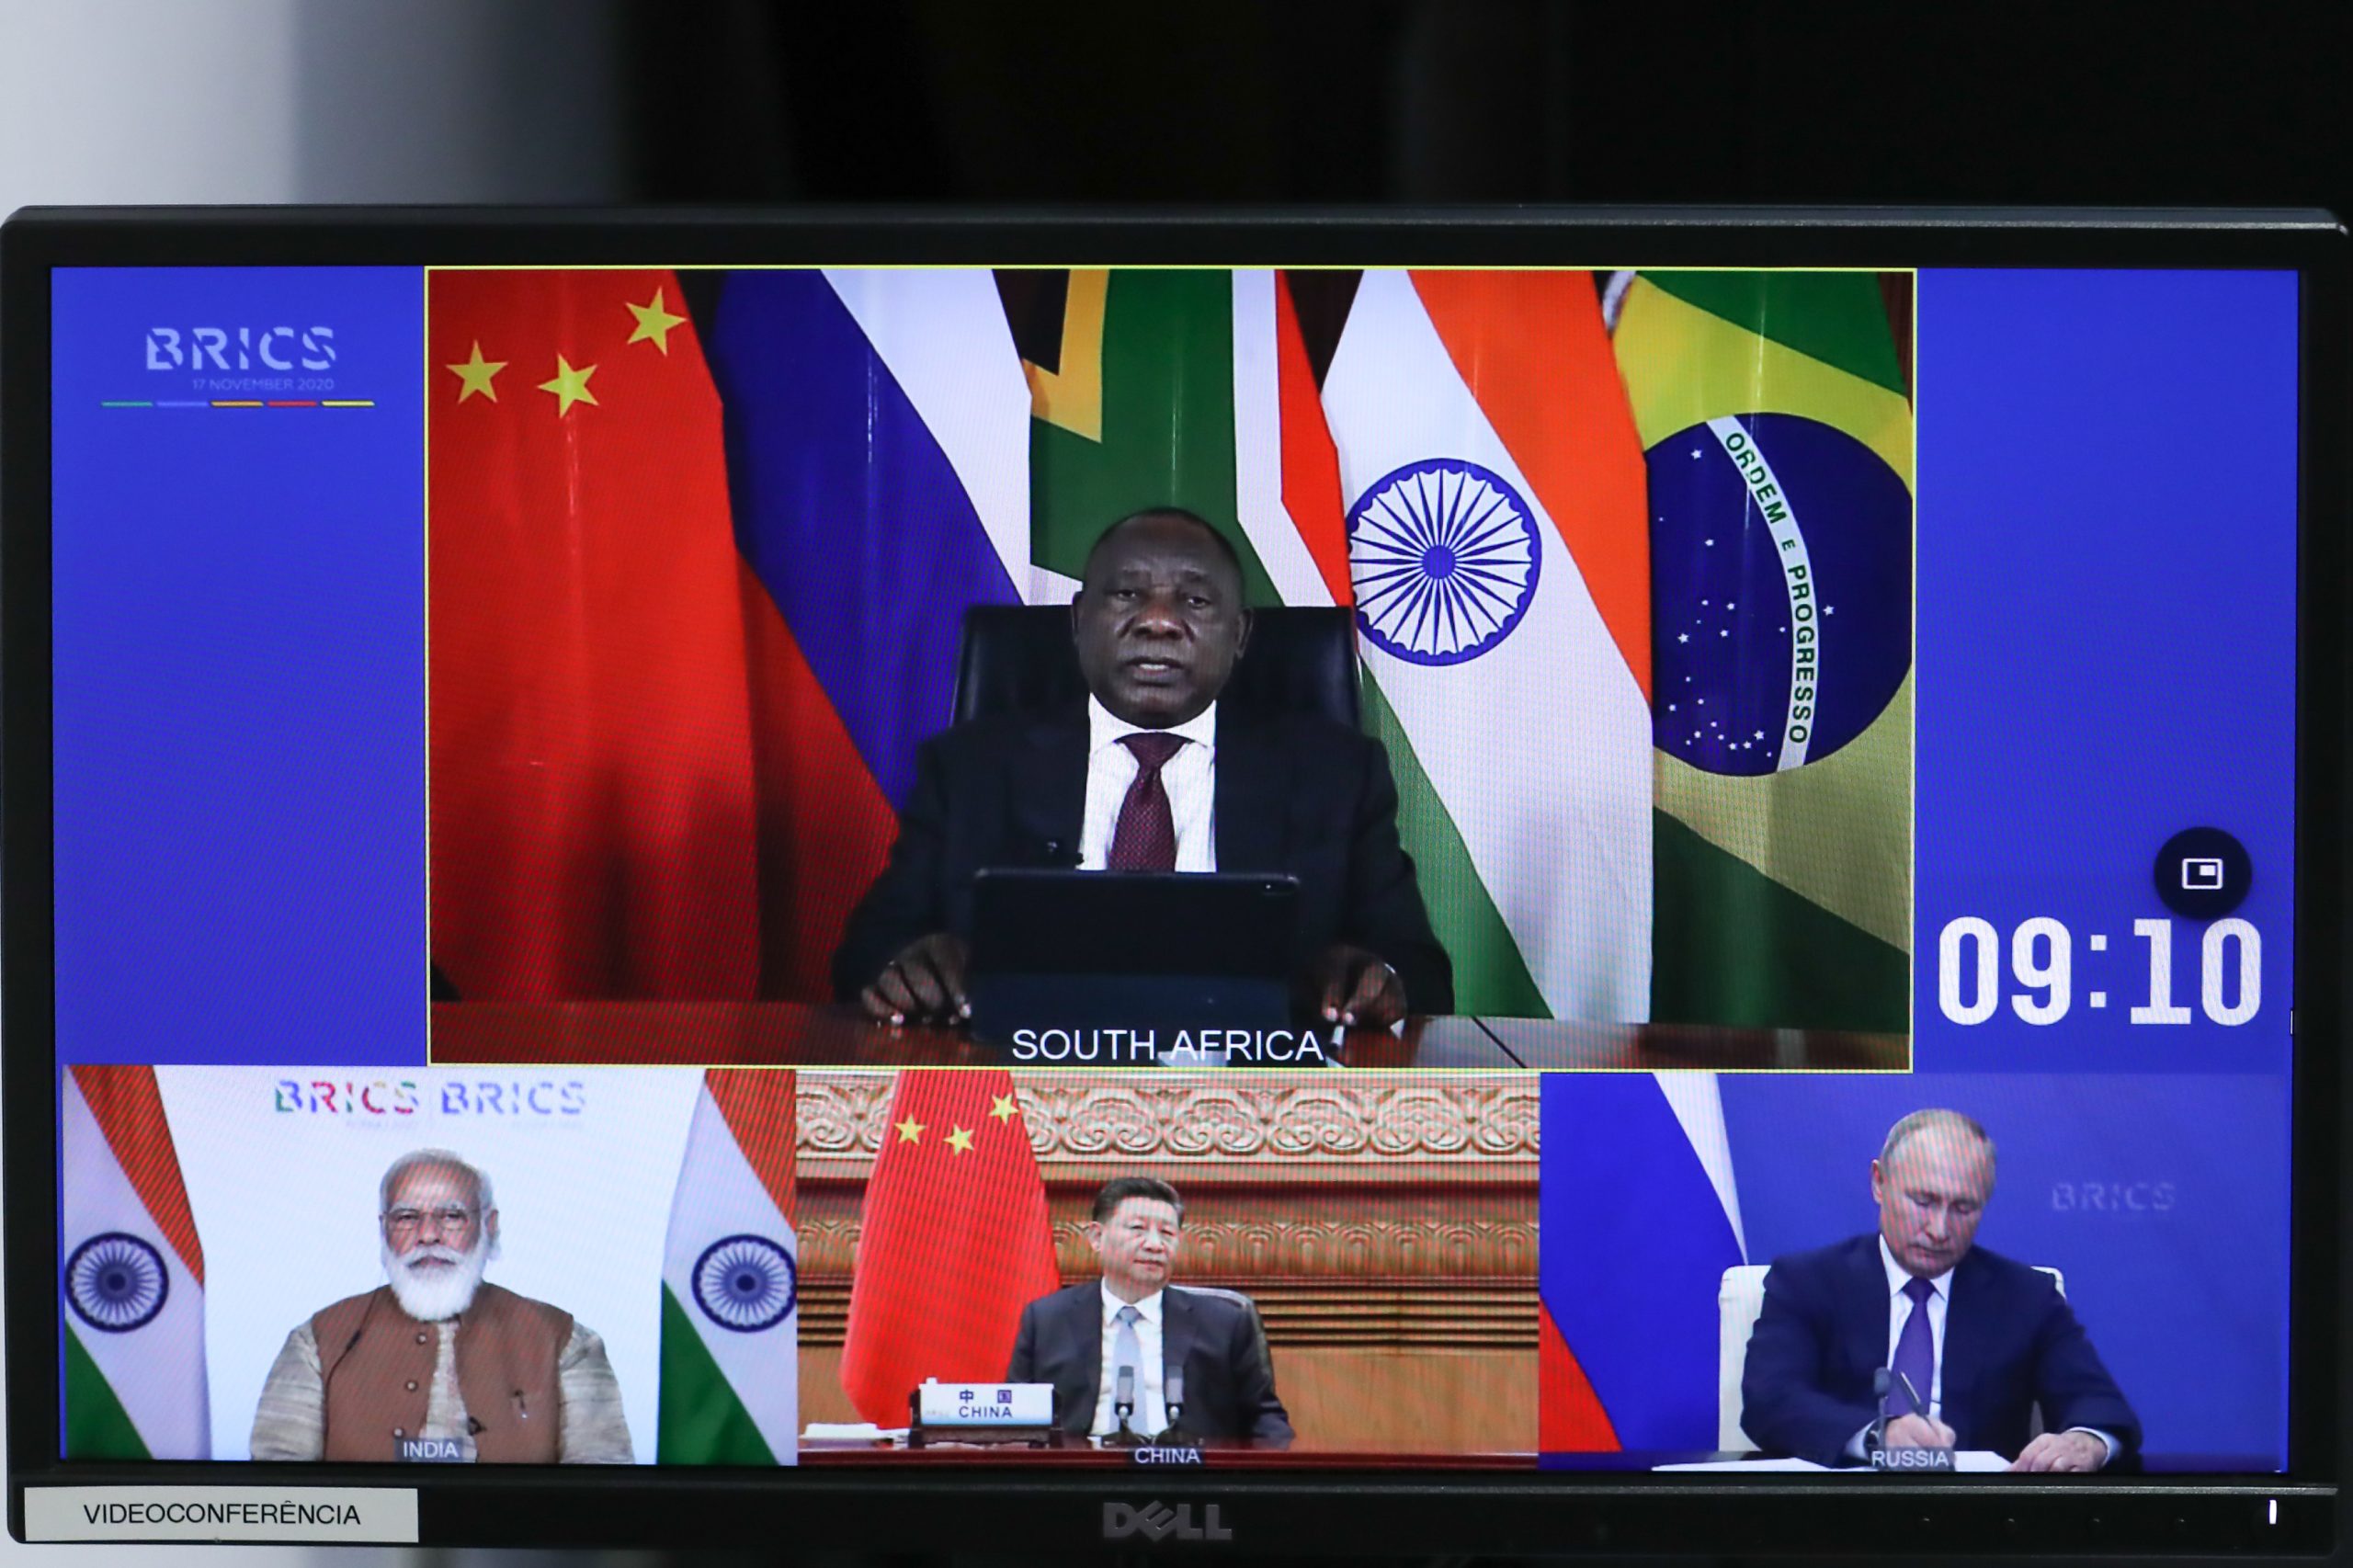 annual virtual BRICS summit in 2020